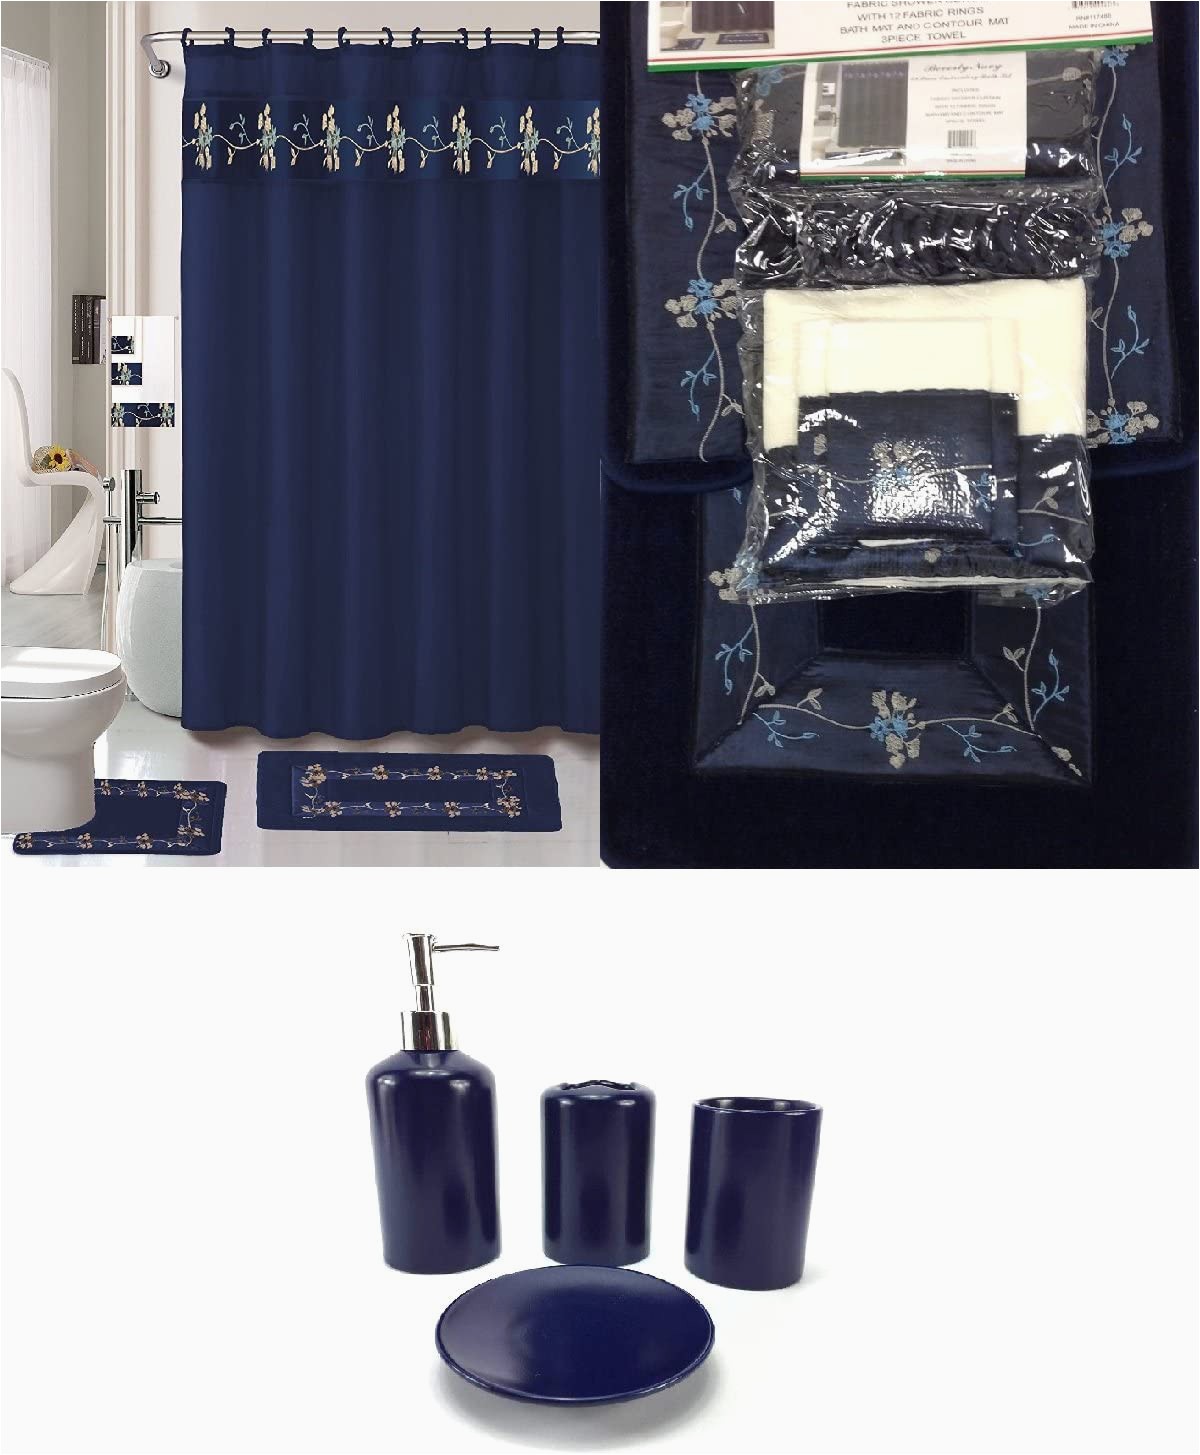 Matching Bath towel and Rug Sets 22 Piece Bath Accessory Set Navy Blue Flower Bathroom Rug Set Shower Curtain & Accessories